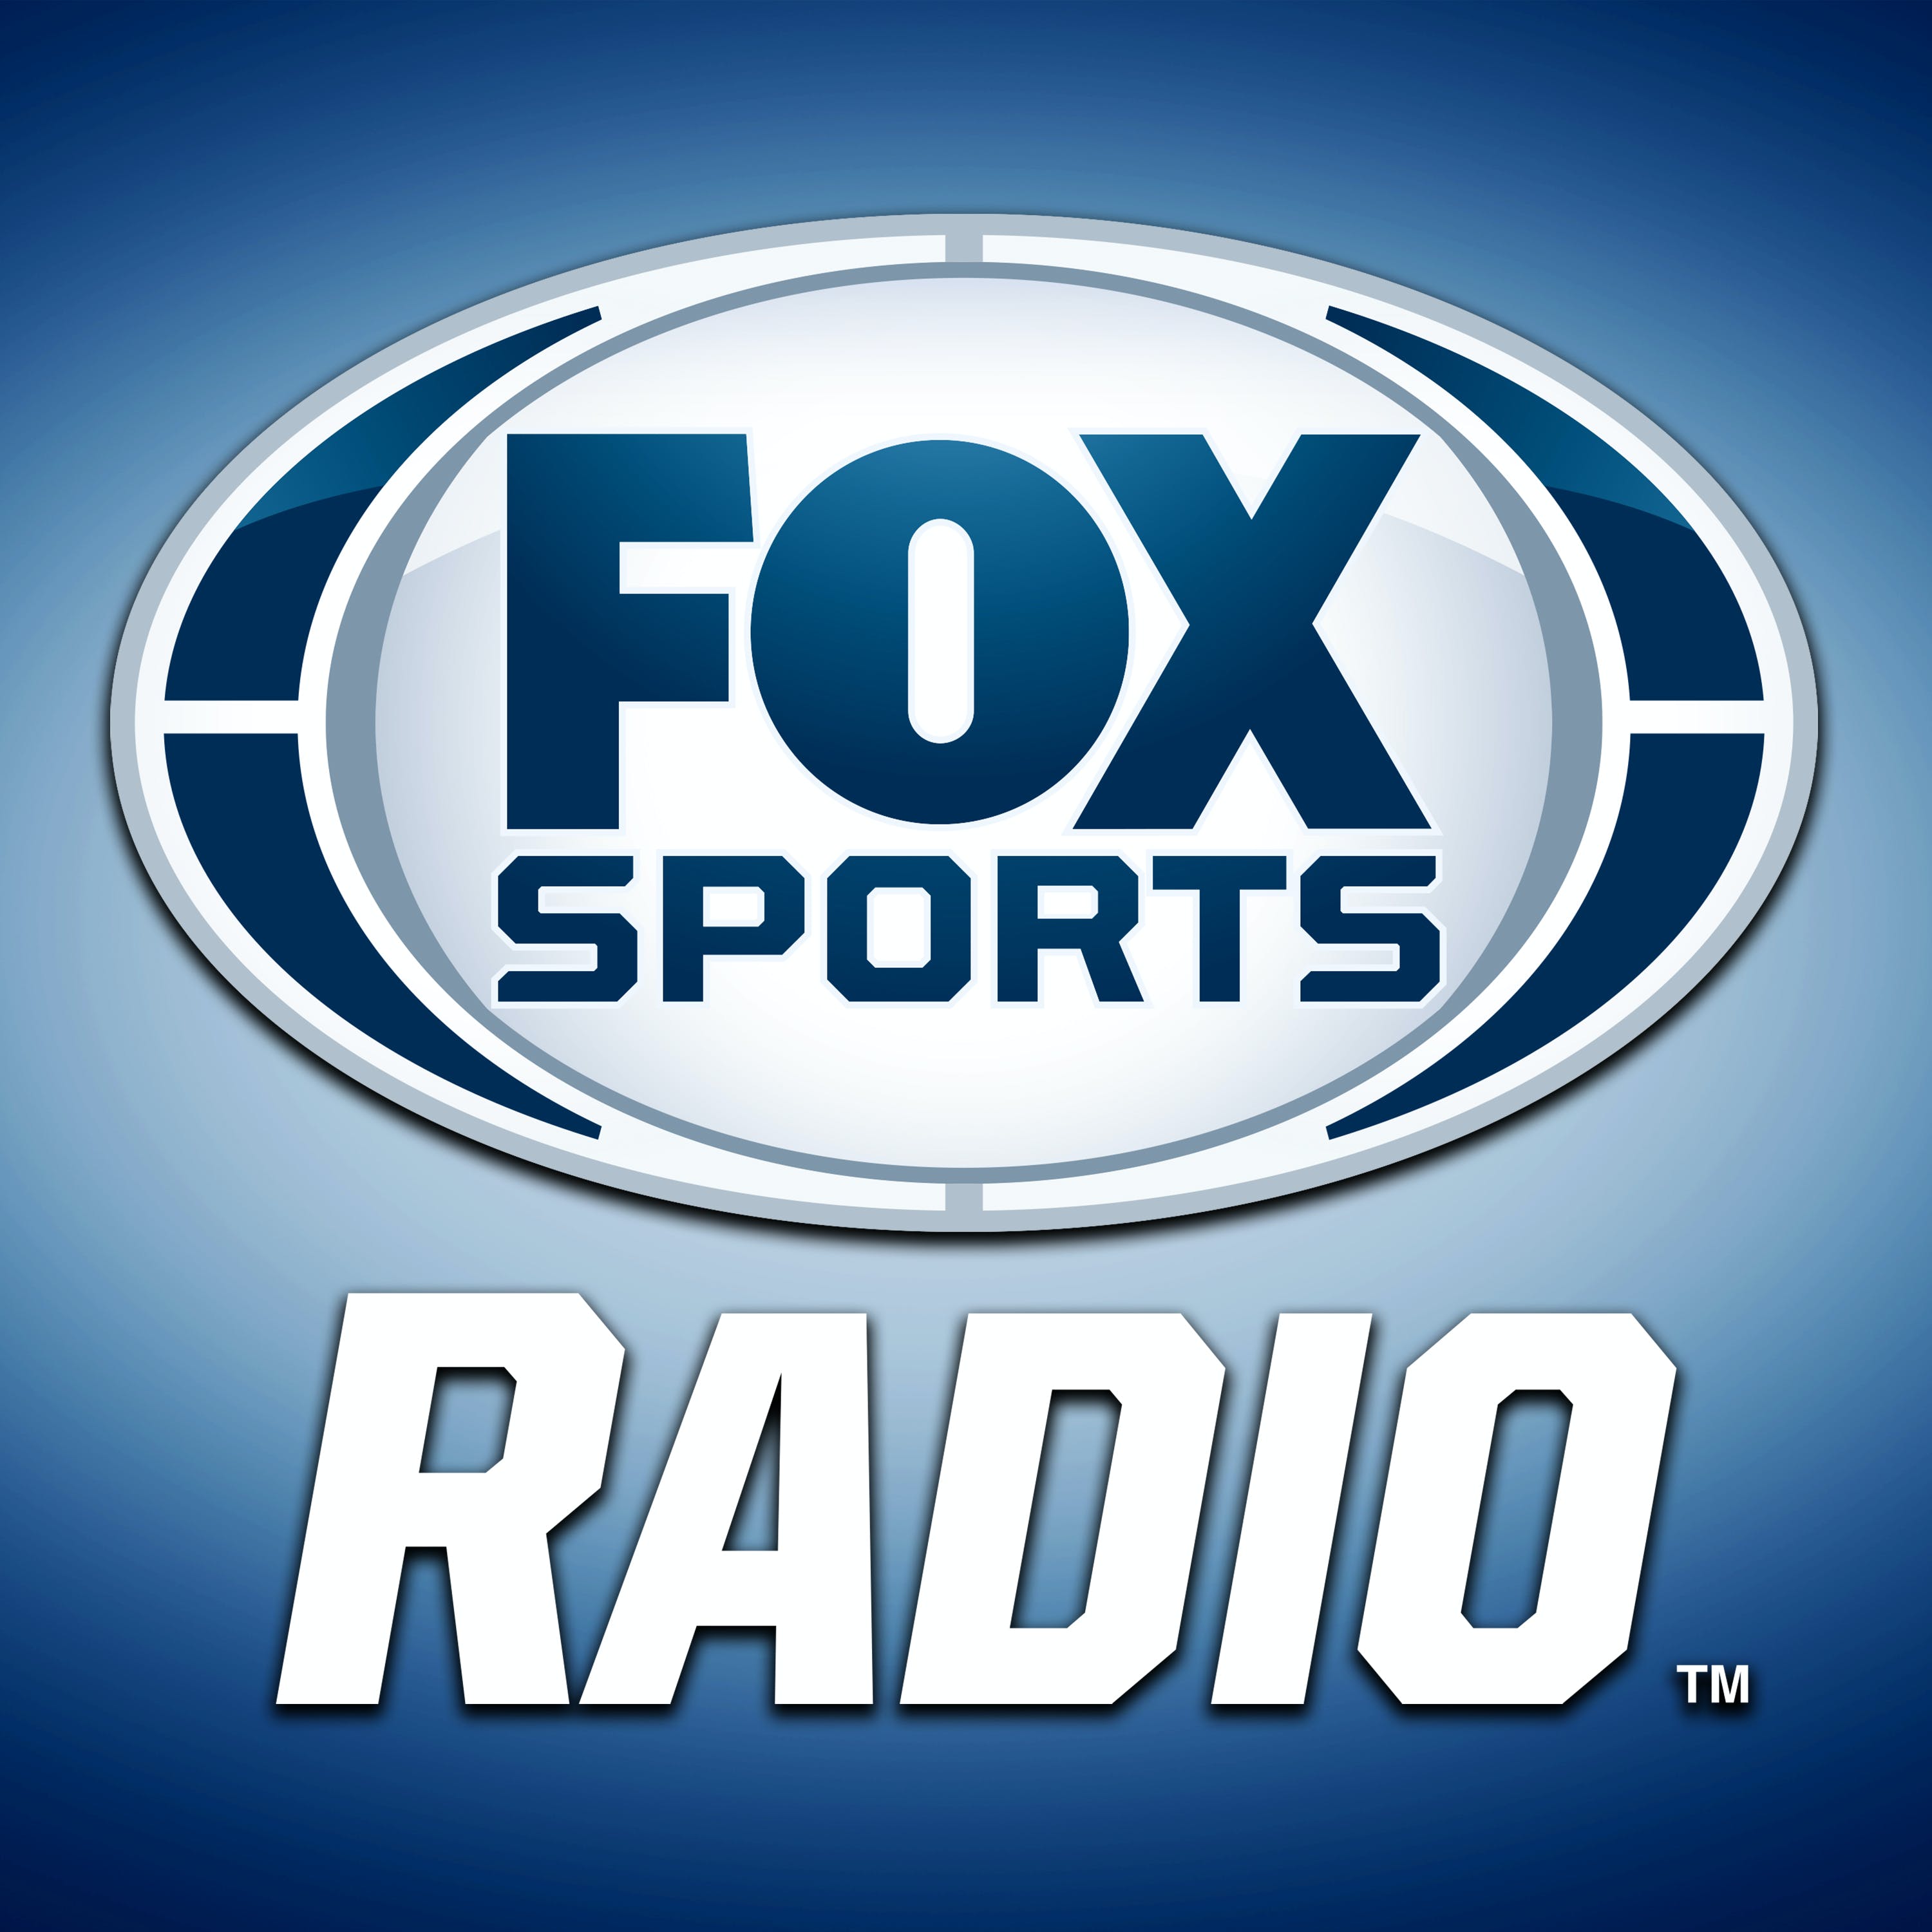 05/29/2021 - FOX Sports Saturday with Brian Noe and Ephraim Salaam